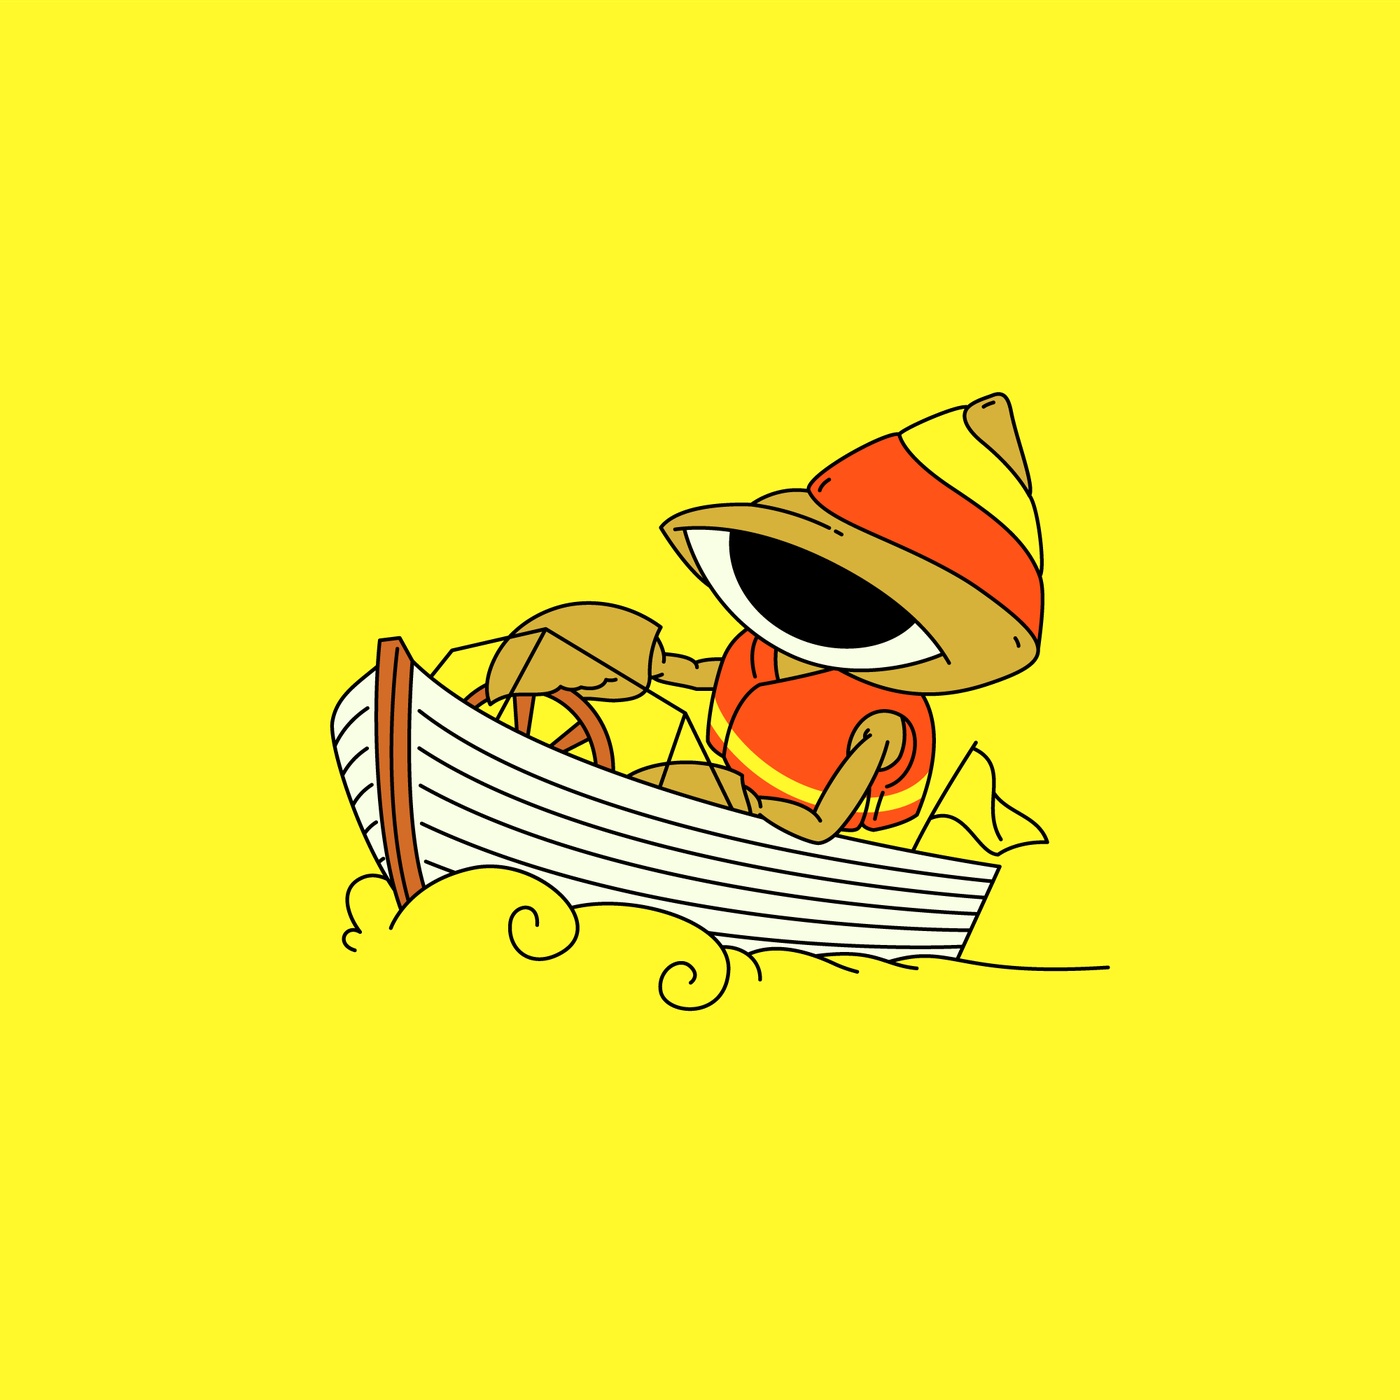 Maika - Perso - Ride de bateau